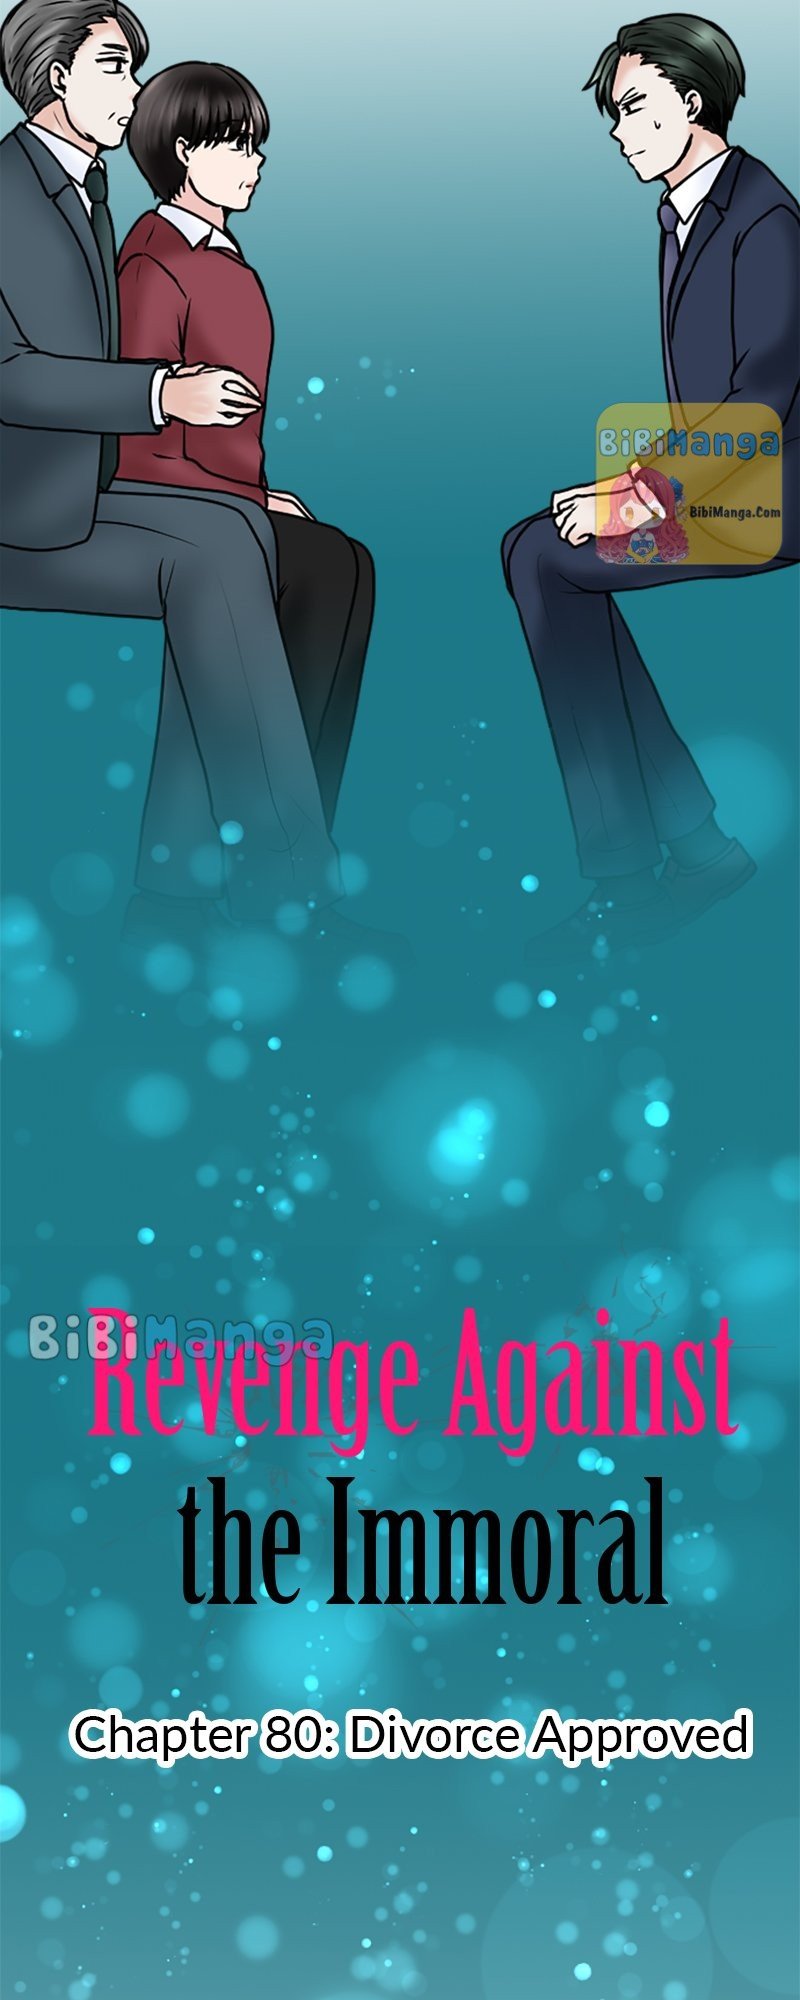 Revenge Against the Immoral chapter 80